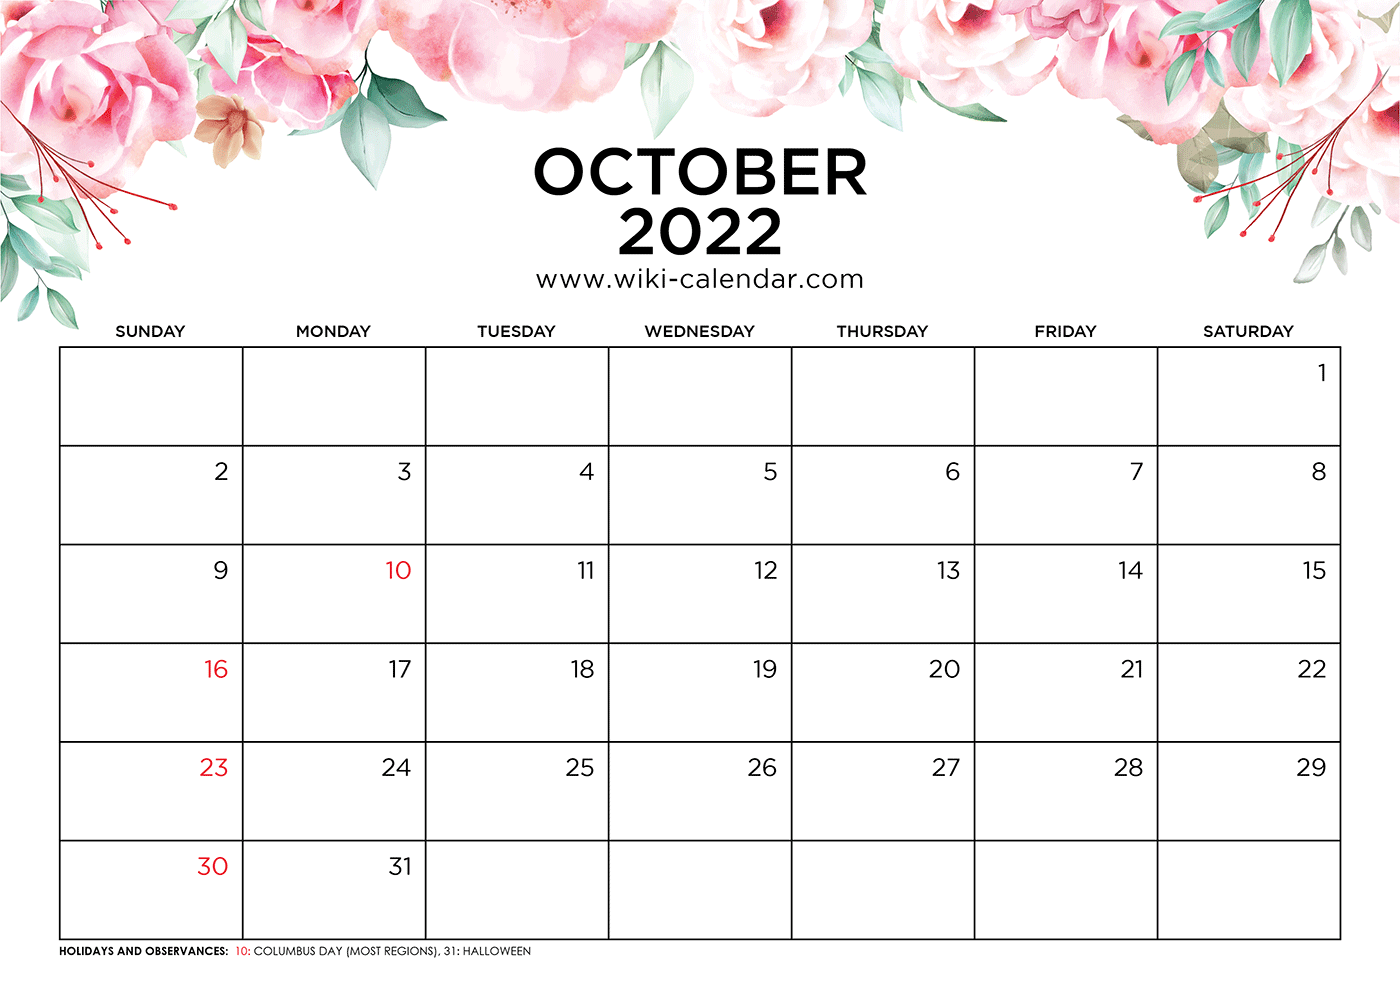 October Calendar To Print 2022 Free Printable October 2022 Calendars - Wiki Calendar